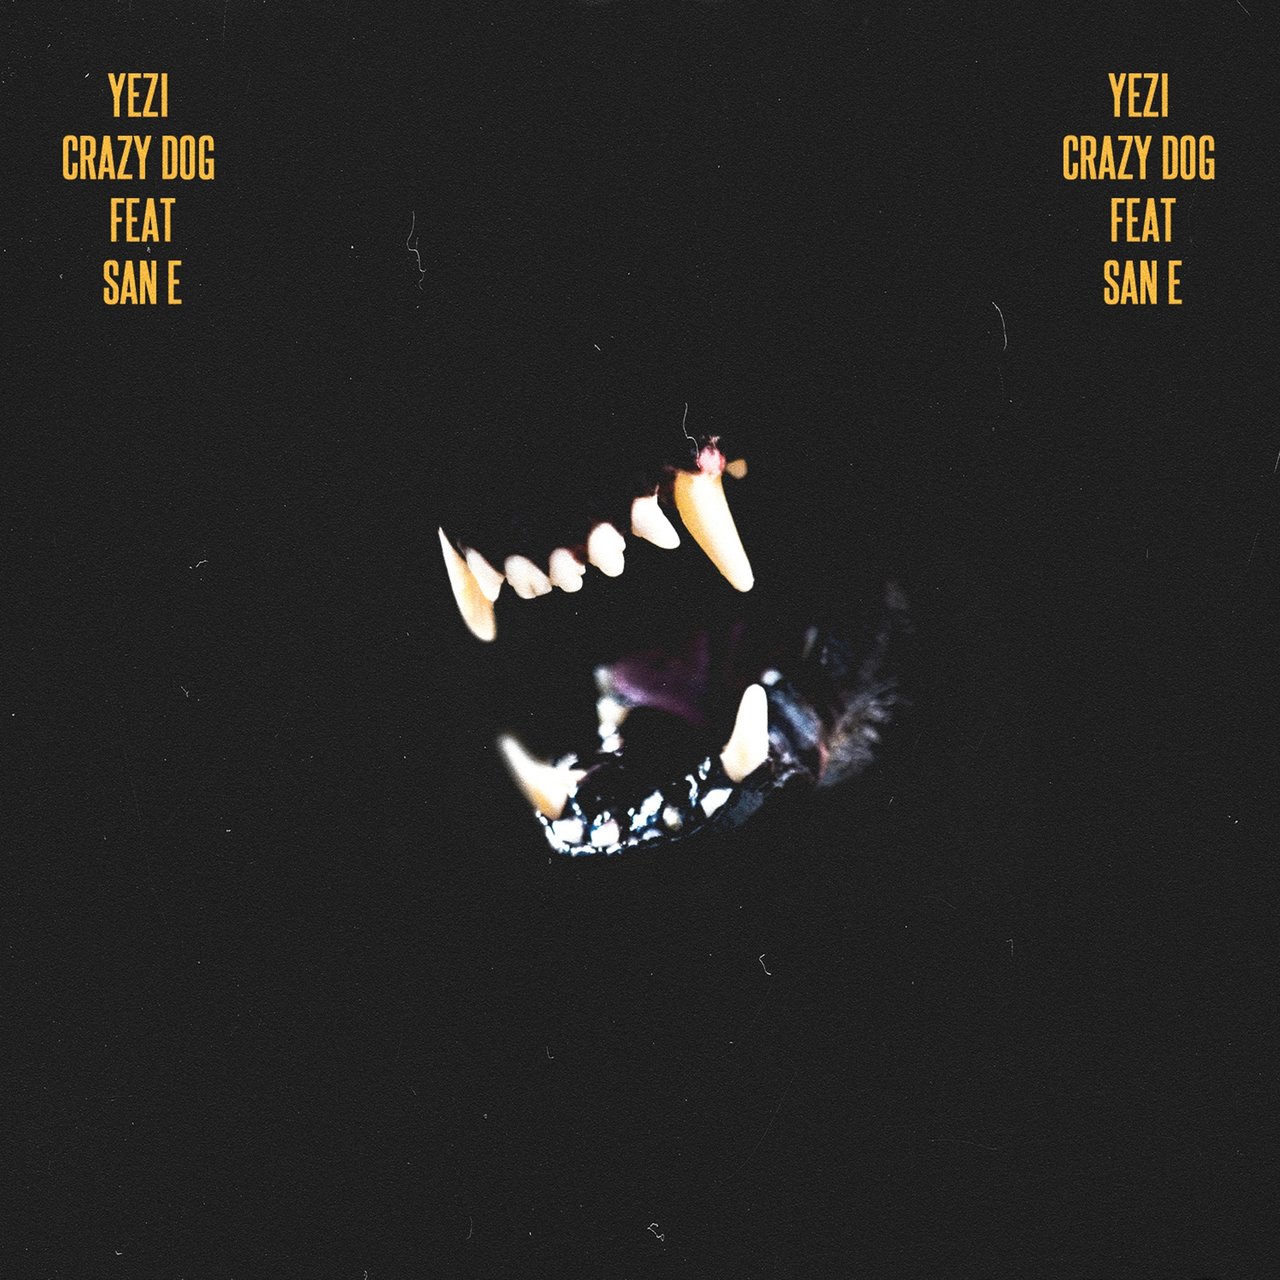 Yezi ft. featuring San E CRAZY DOG cover artwork